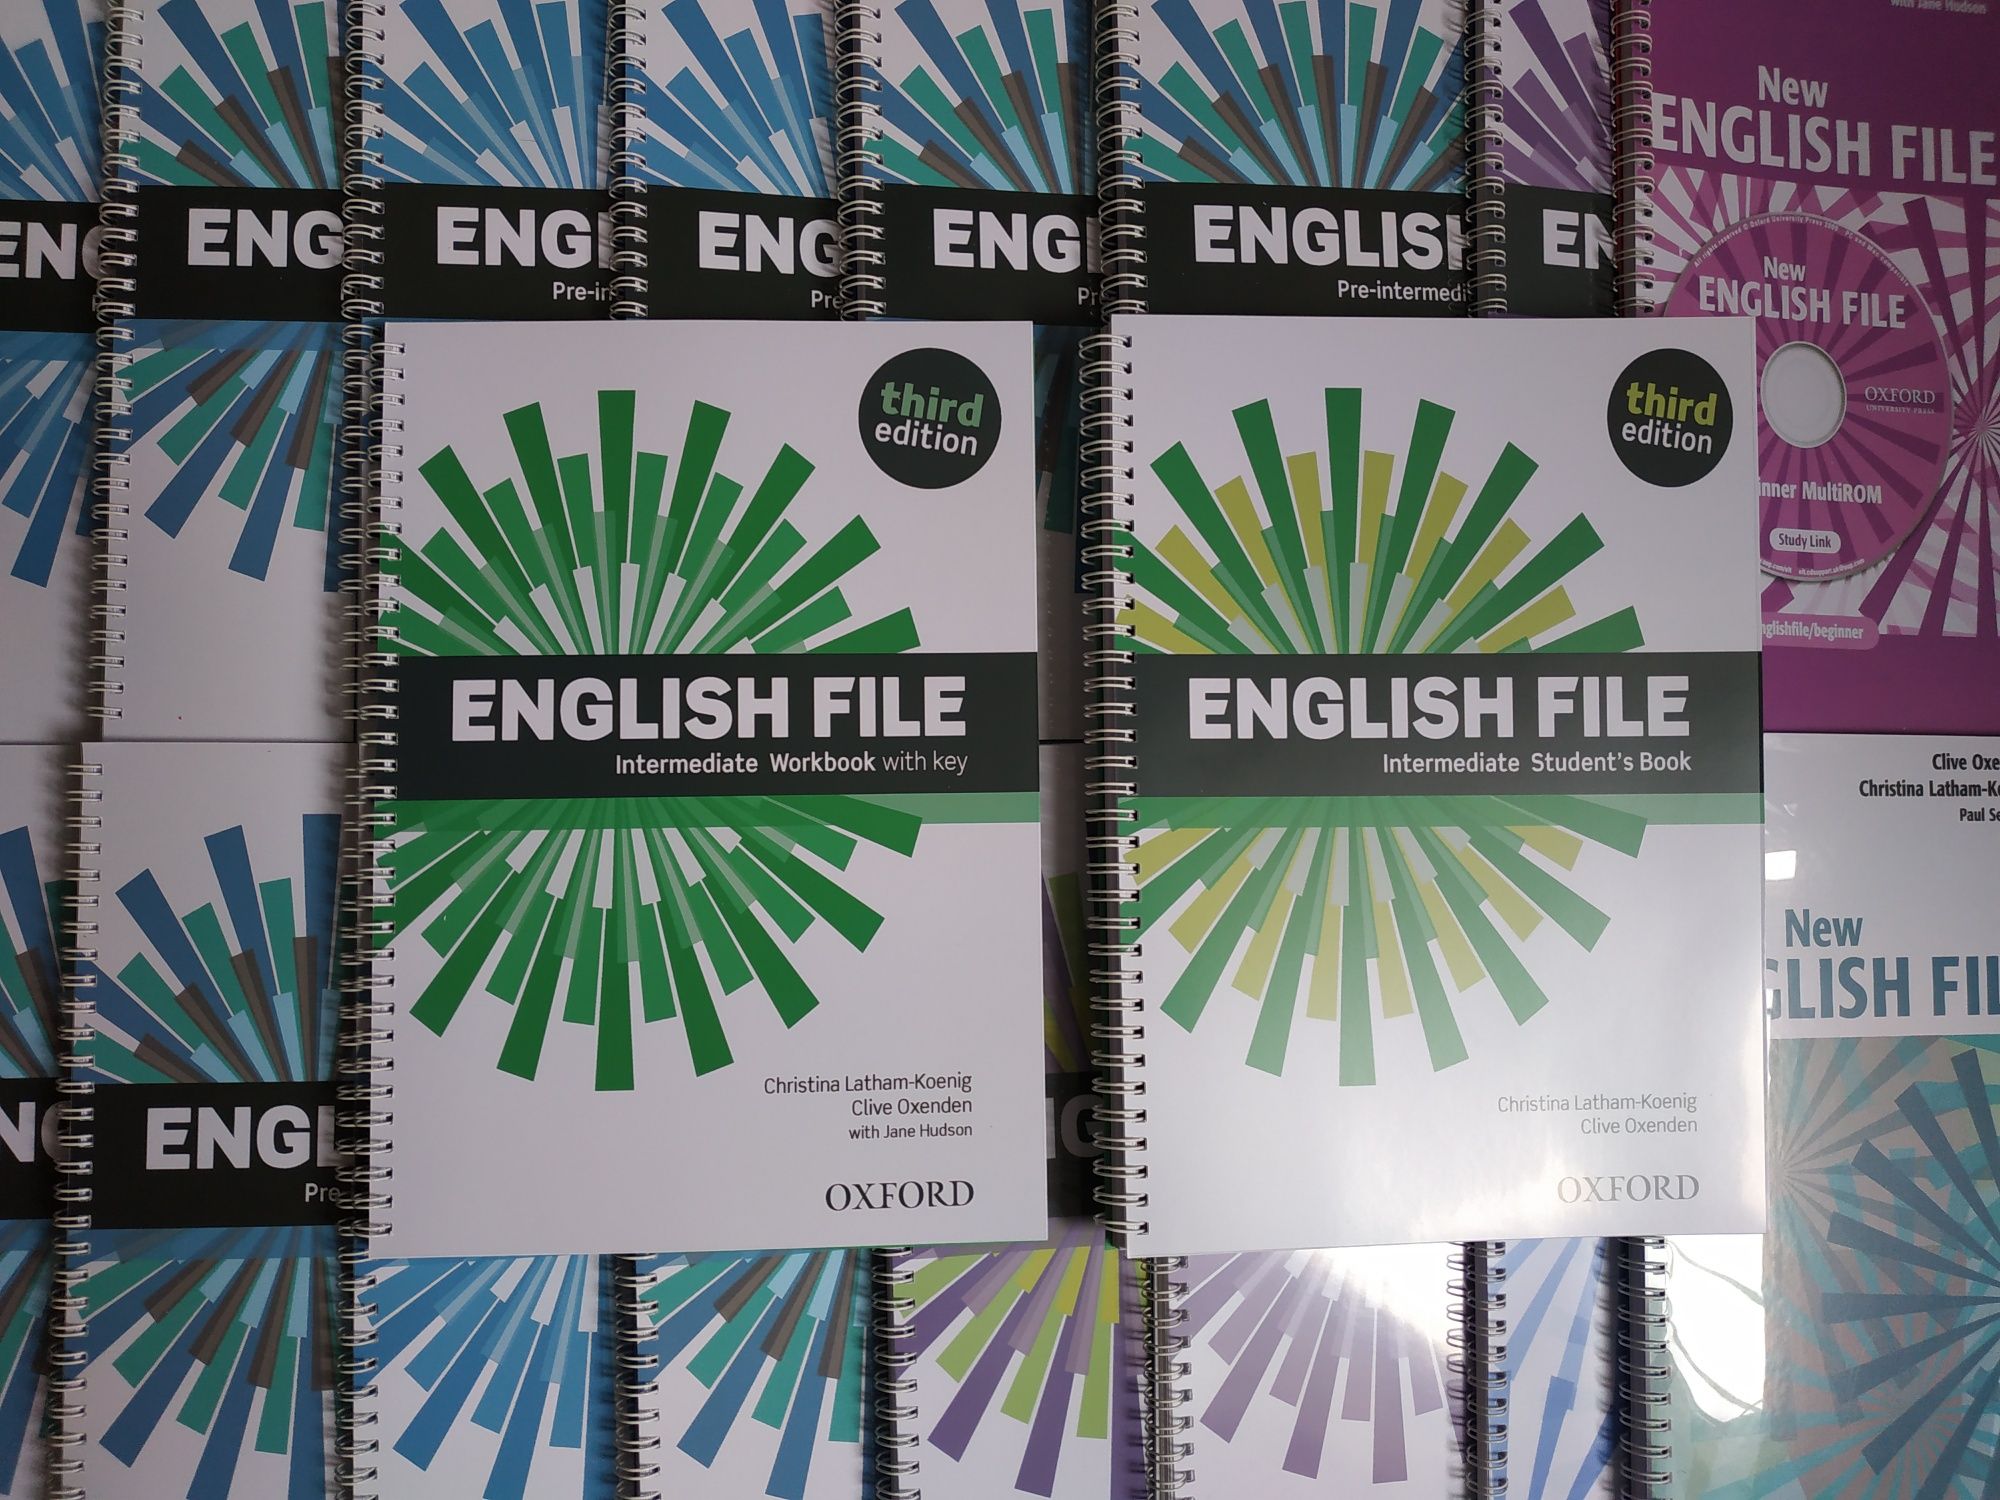 English File 3rd edition, New English File 2 edition все уровни